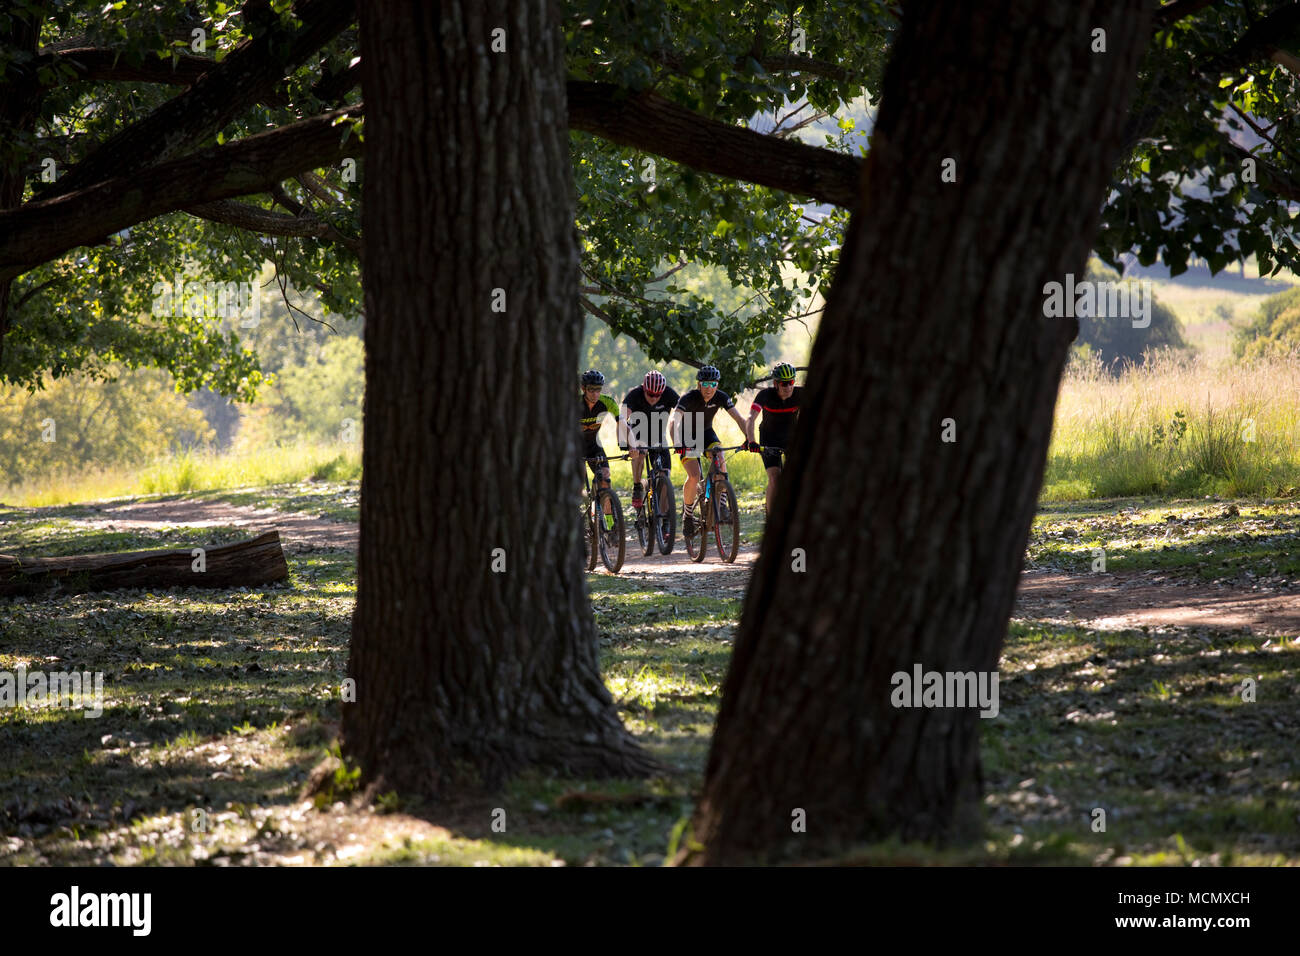 Cyclists riding through a park Stock Photo